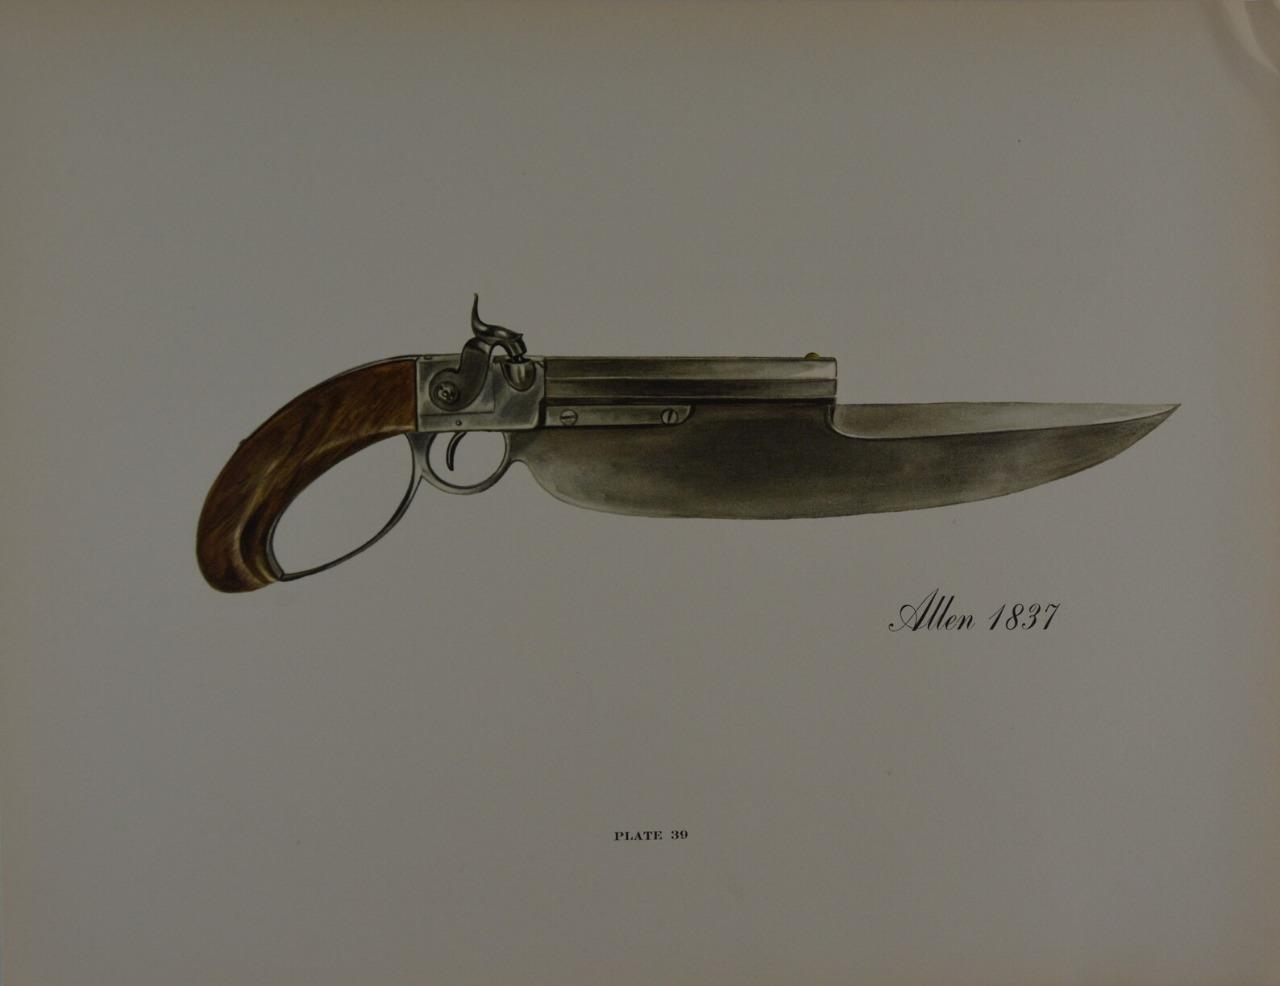 Antique Pistol Knife Gun Art Print Military History United States Printed 1955